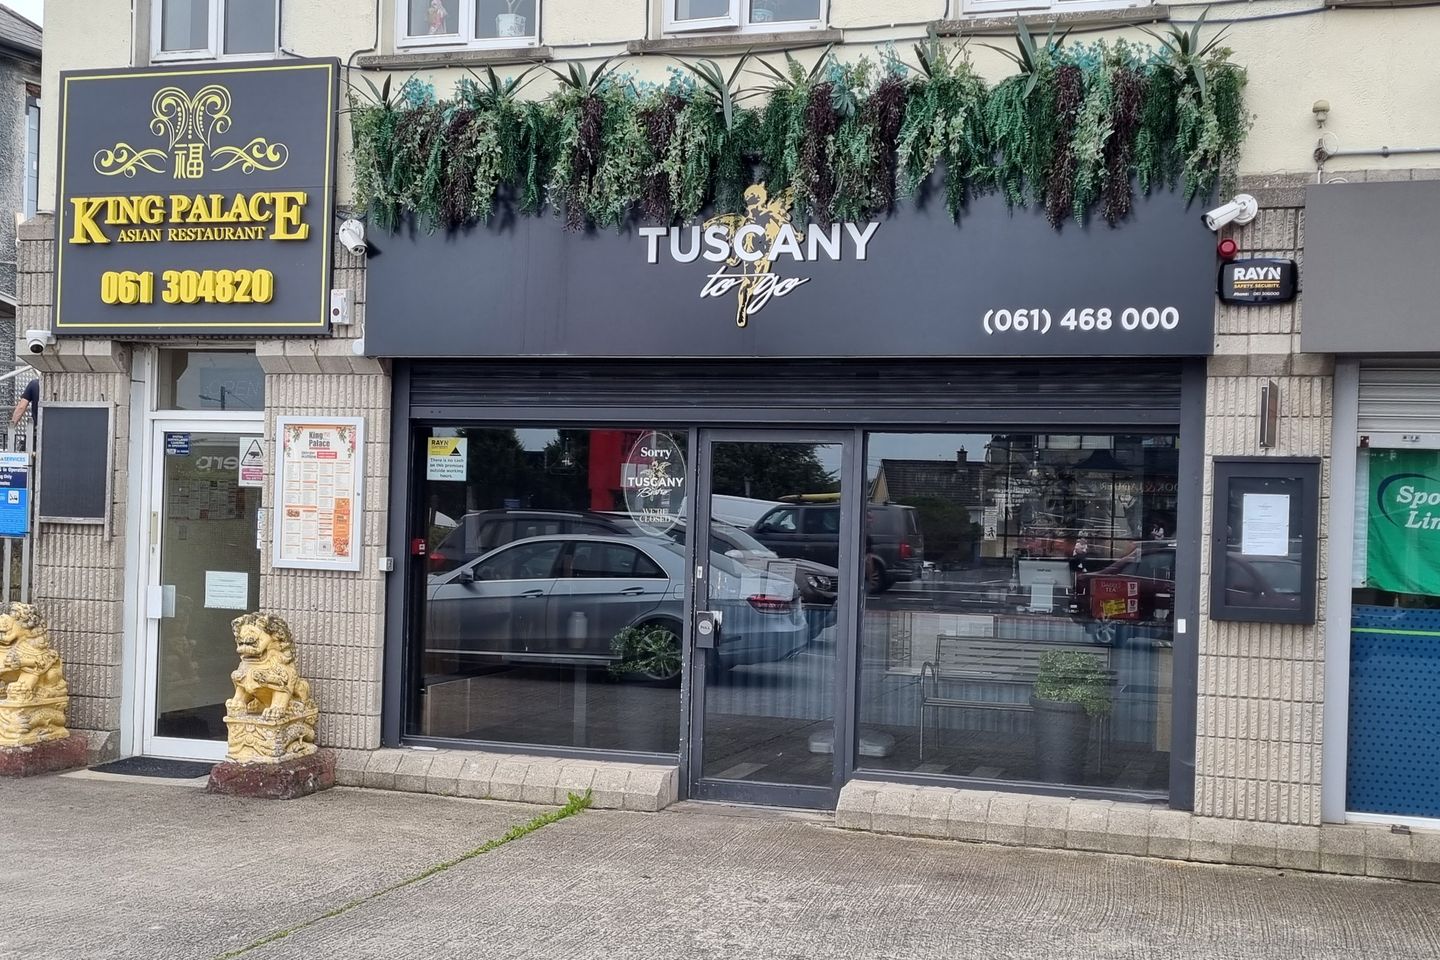 Tuscany To Go, Ambassador Centre, St. Nessans Road, Dooradoyle, Co. Limerick, V94XK50